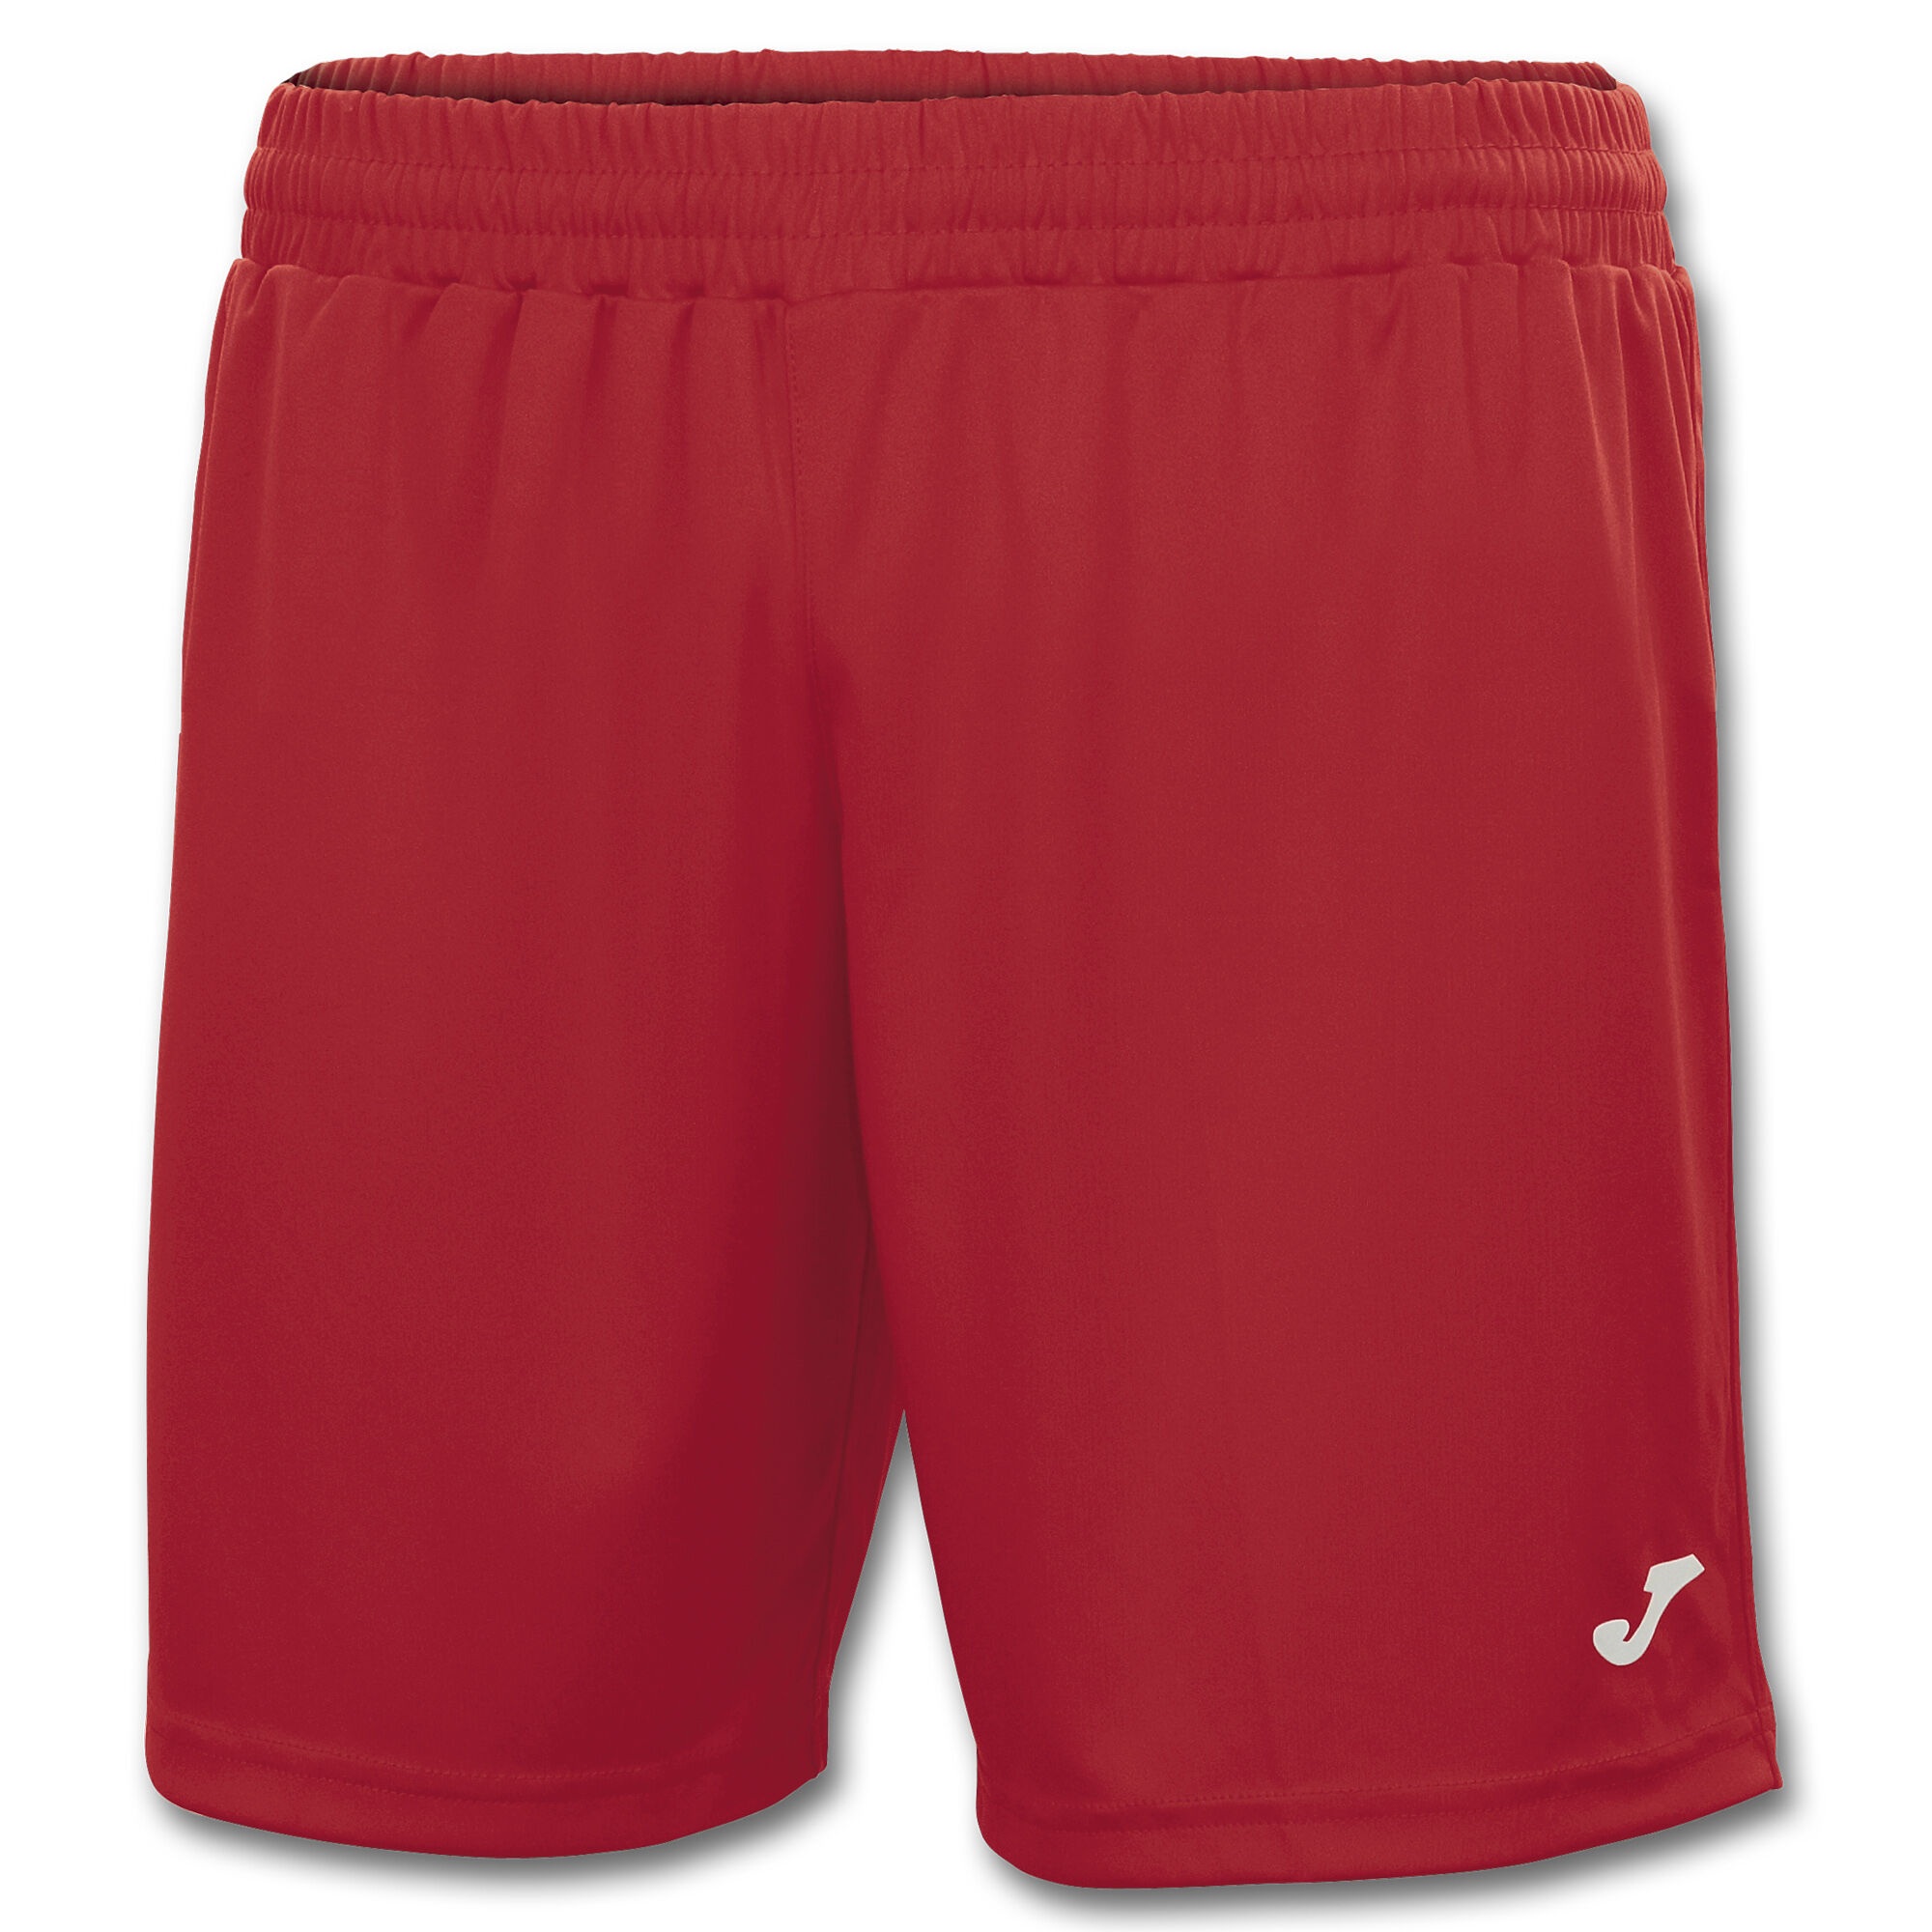 Shorts man Treviso red